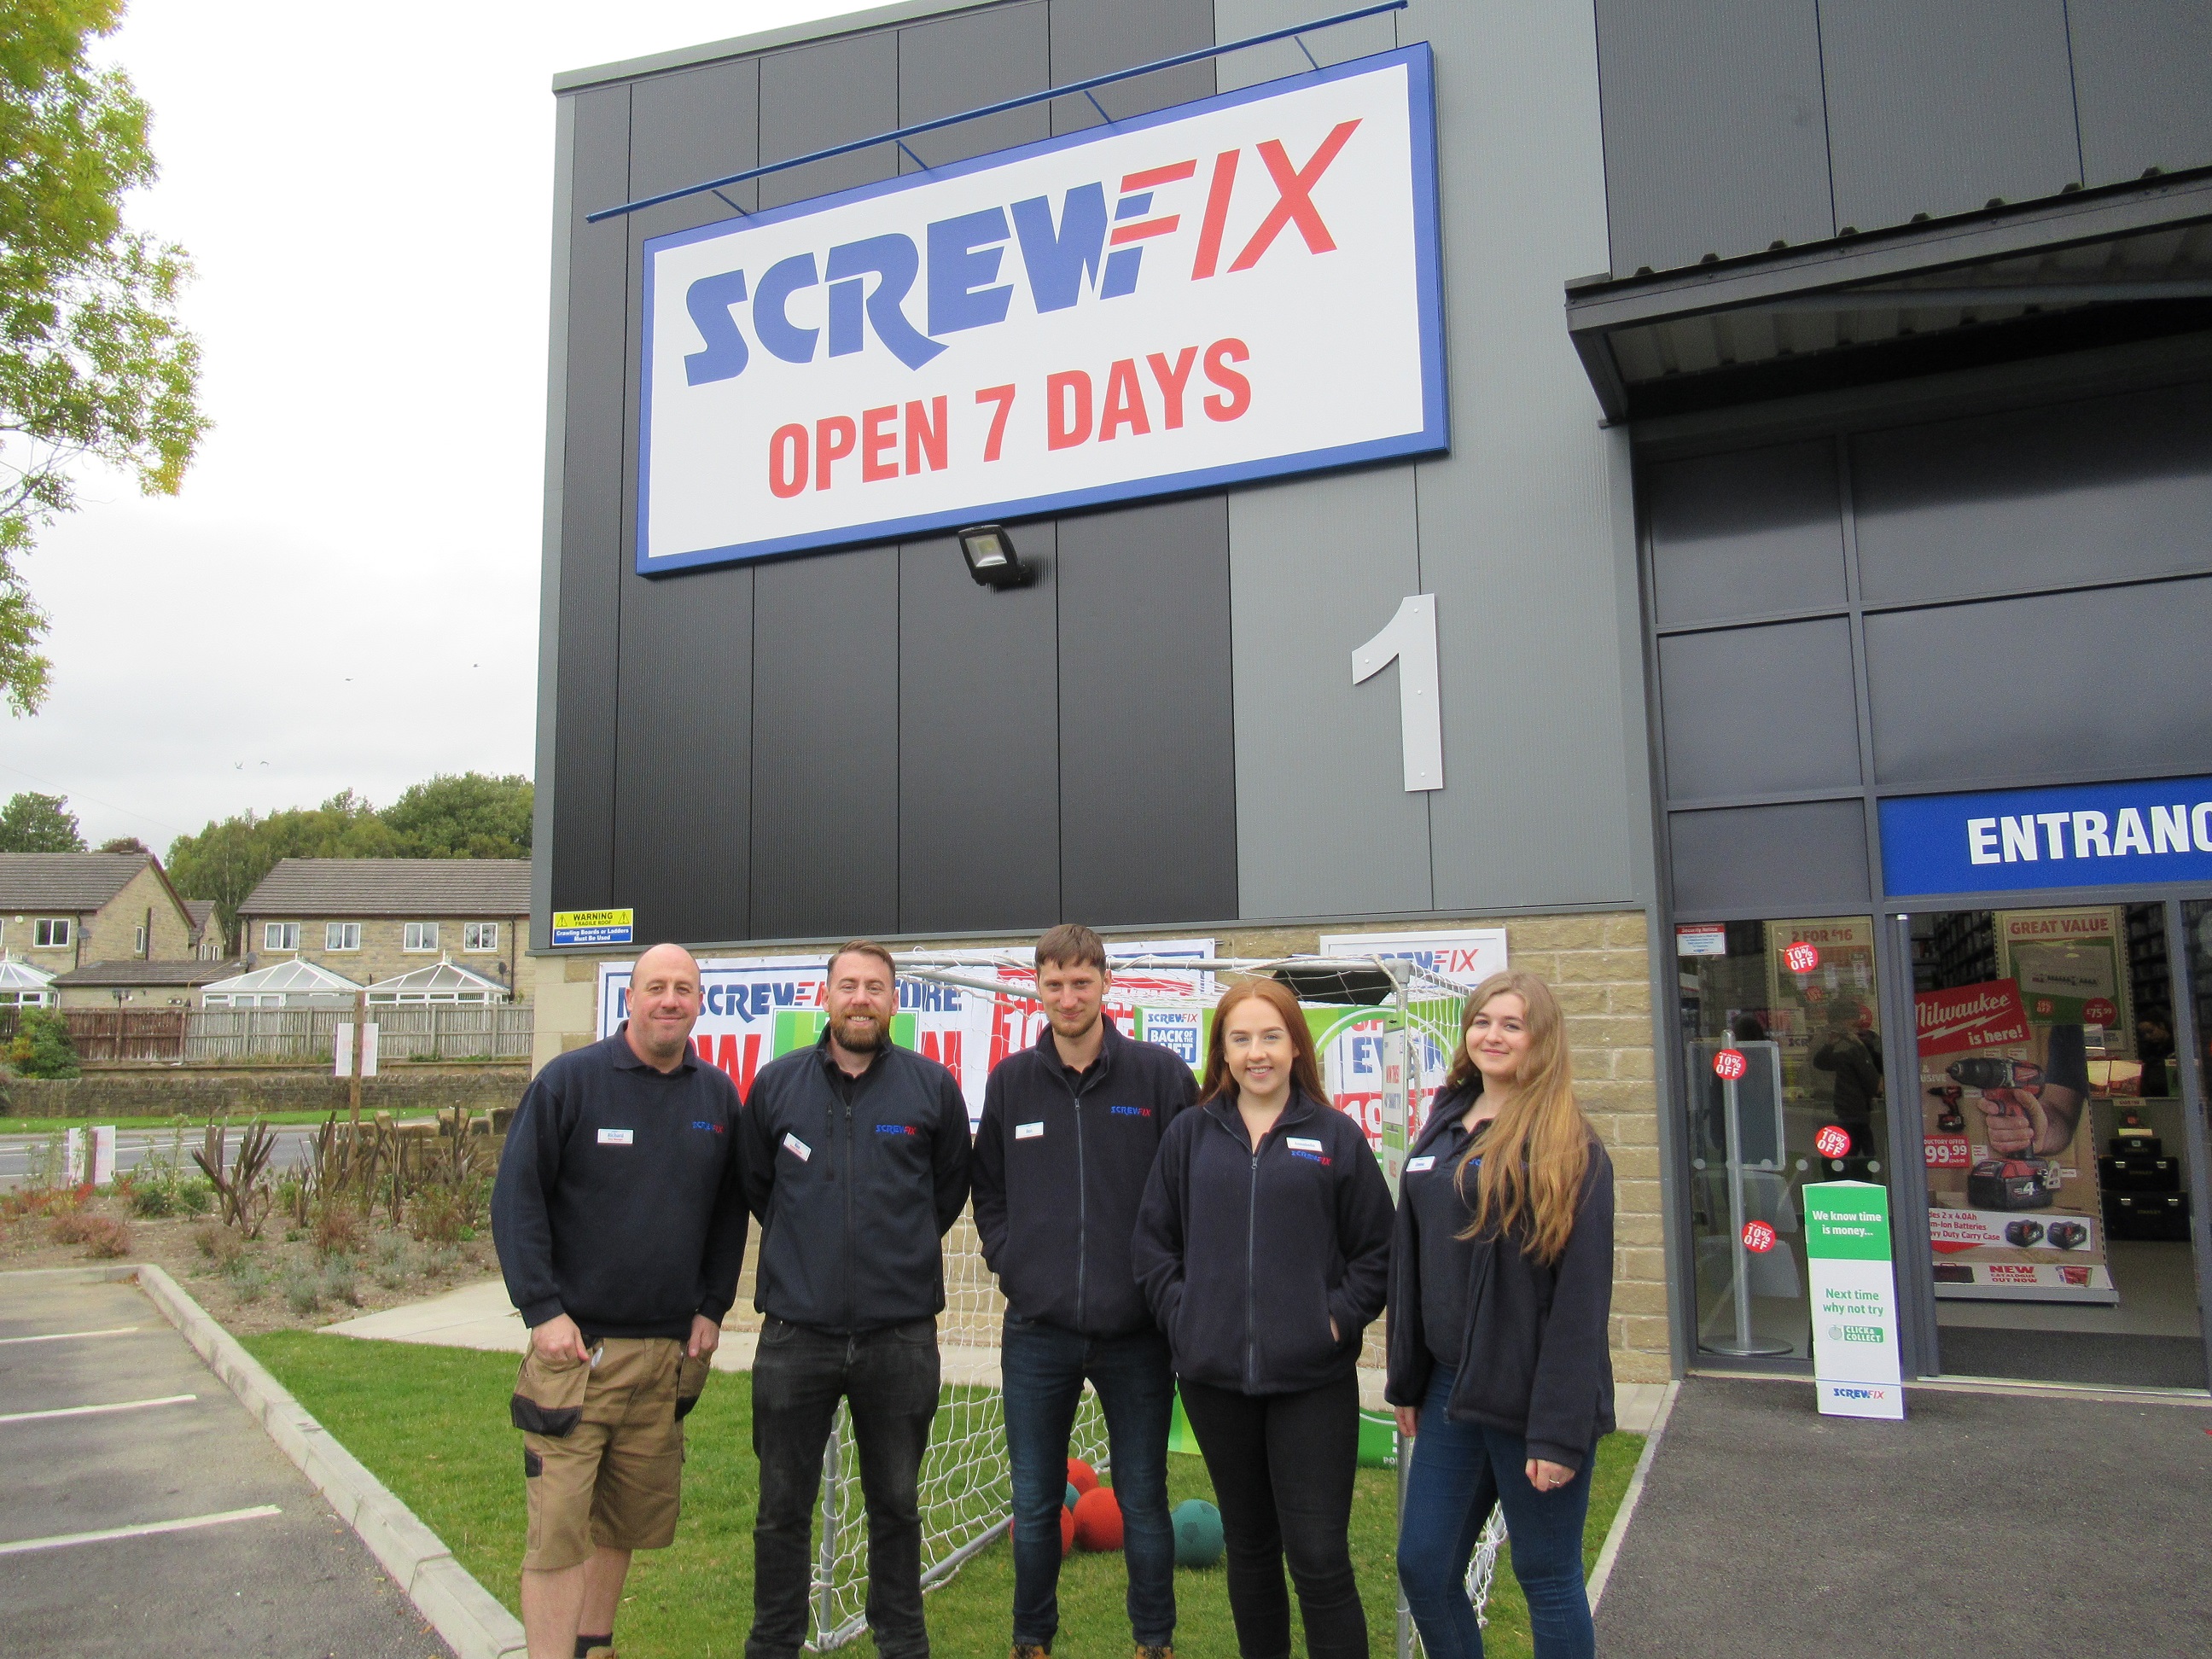 Cleckheaton Screwfix store is declared a runaway success